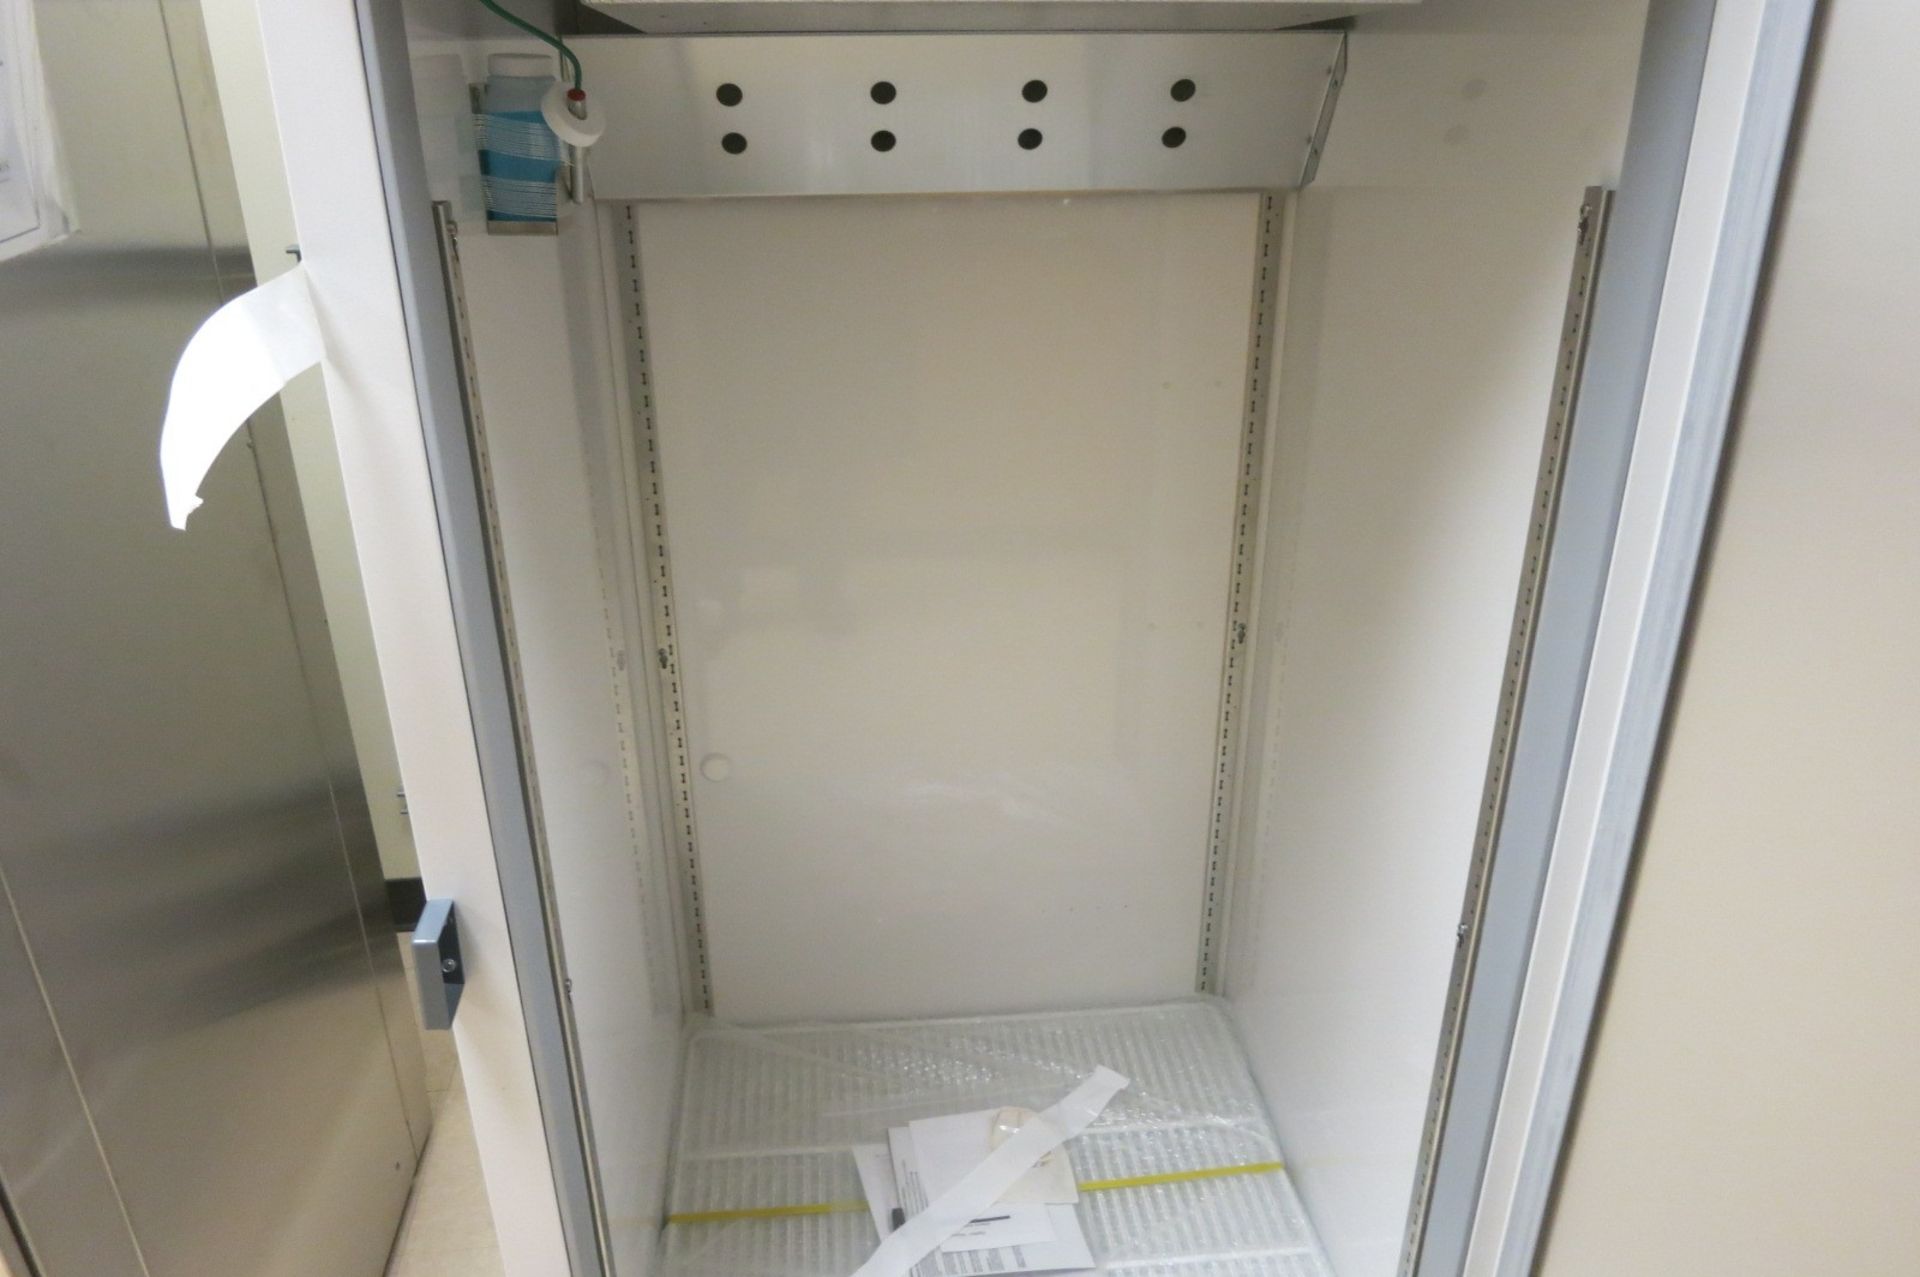 Laboratory Refrigerator - Image 2 of 2